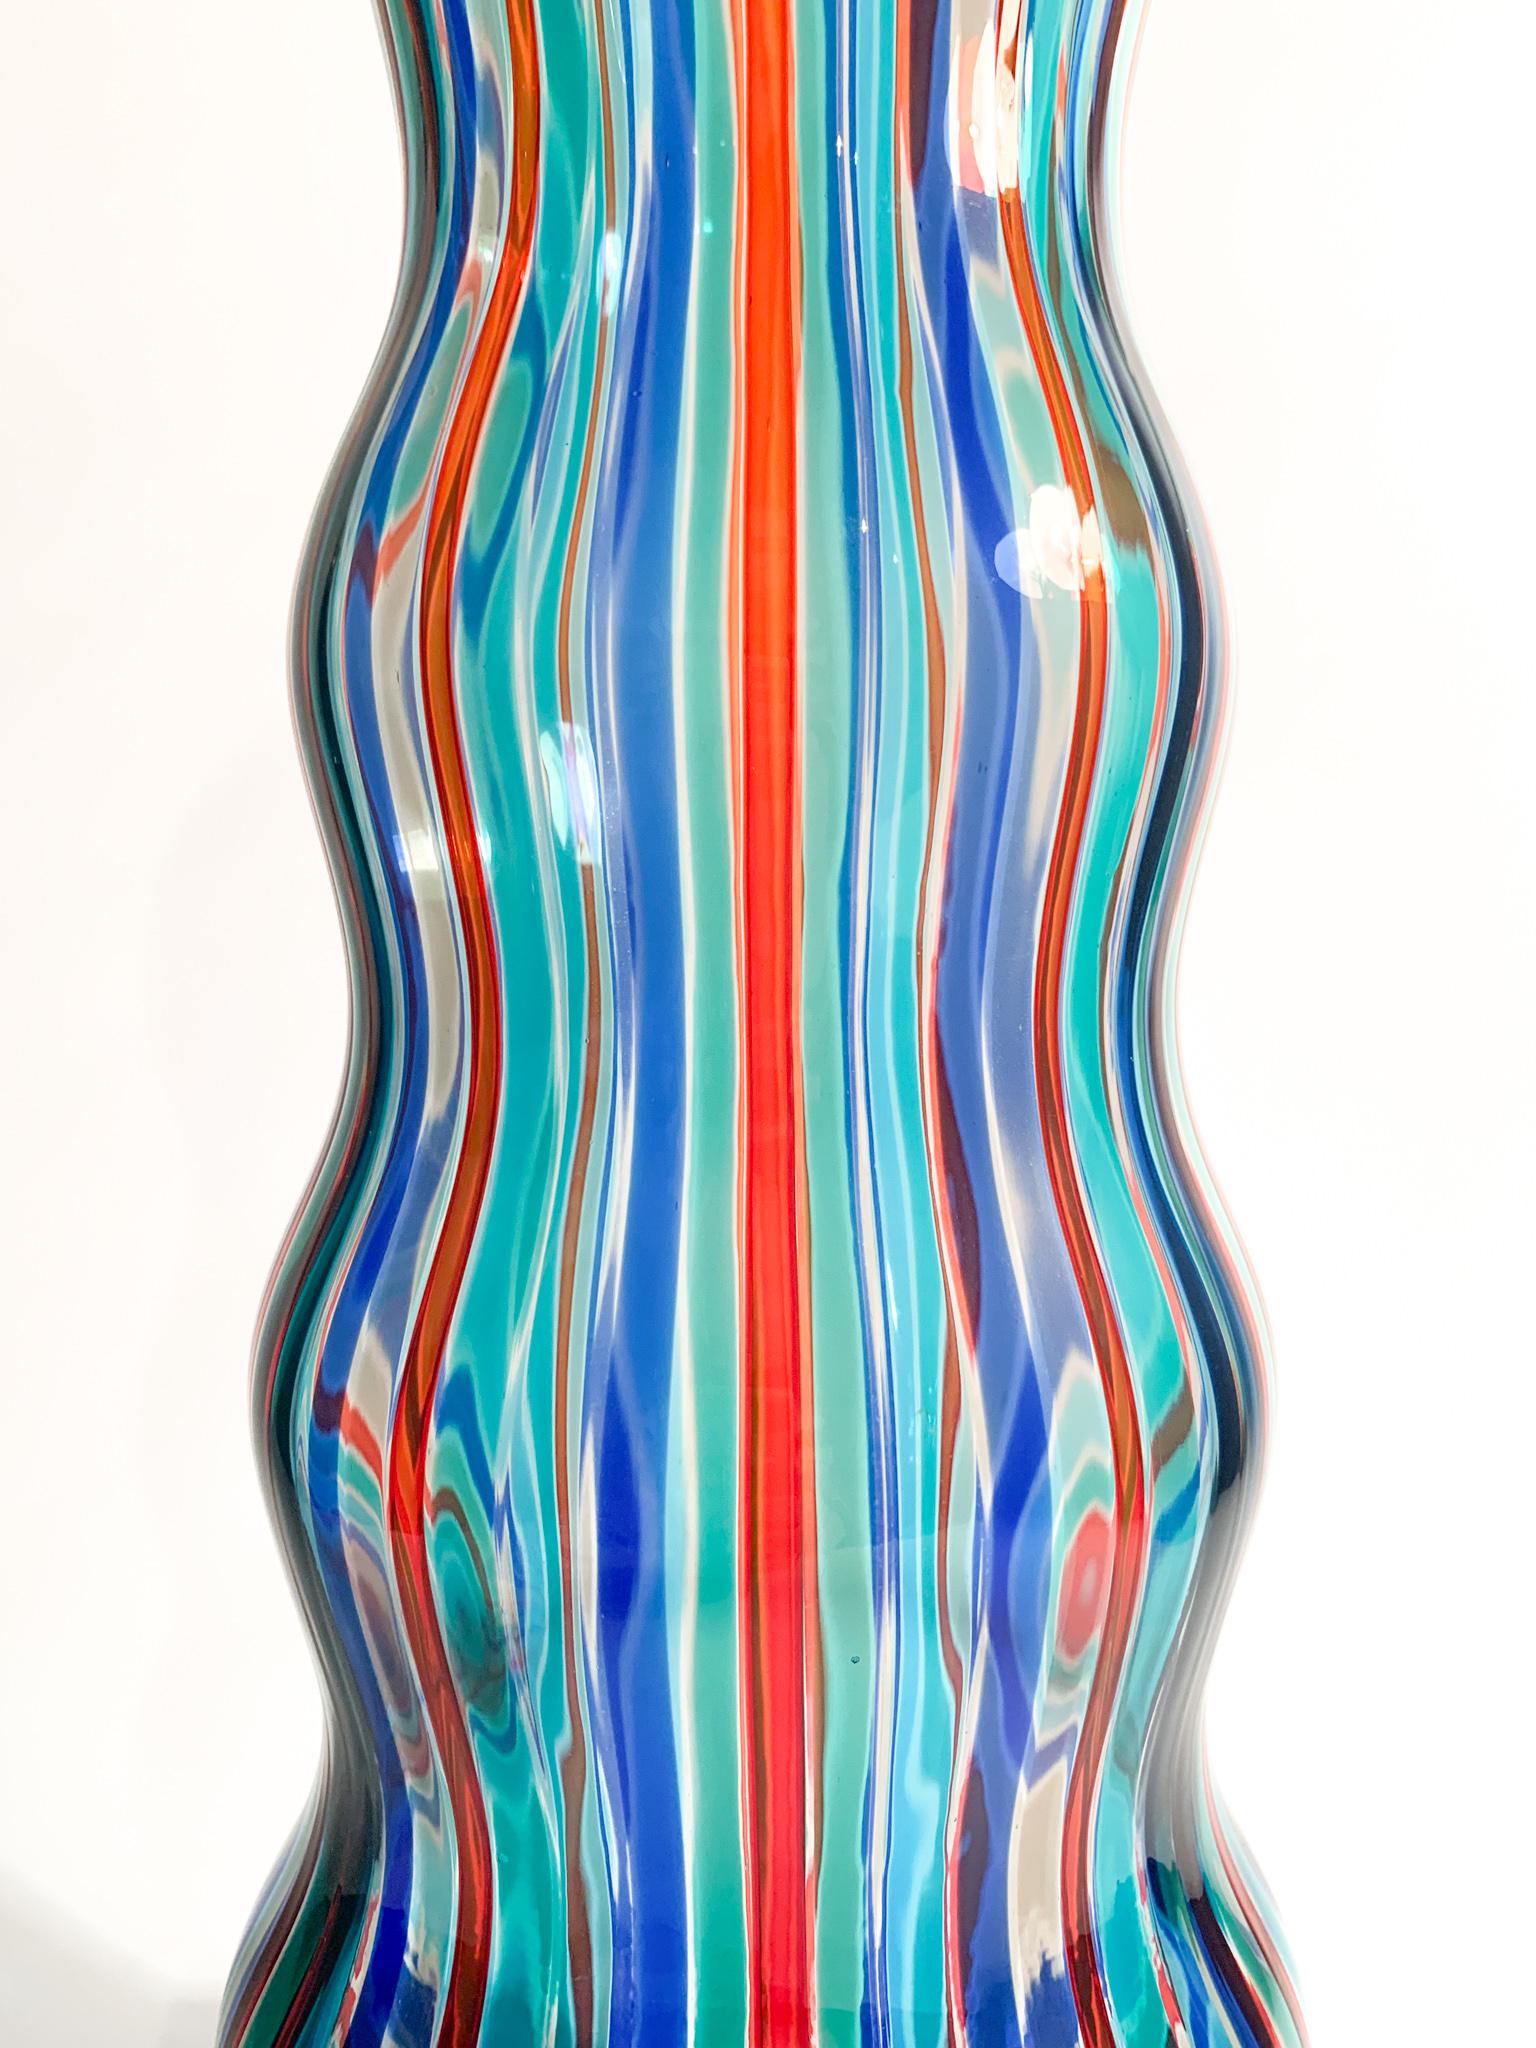 'Arado' Vase by Alessandro Mendini for Venini from 1988 For Sale 4